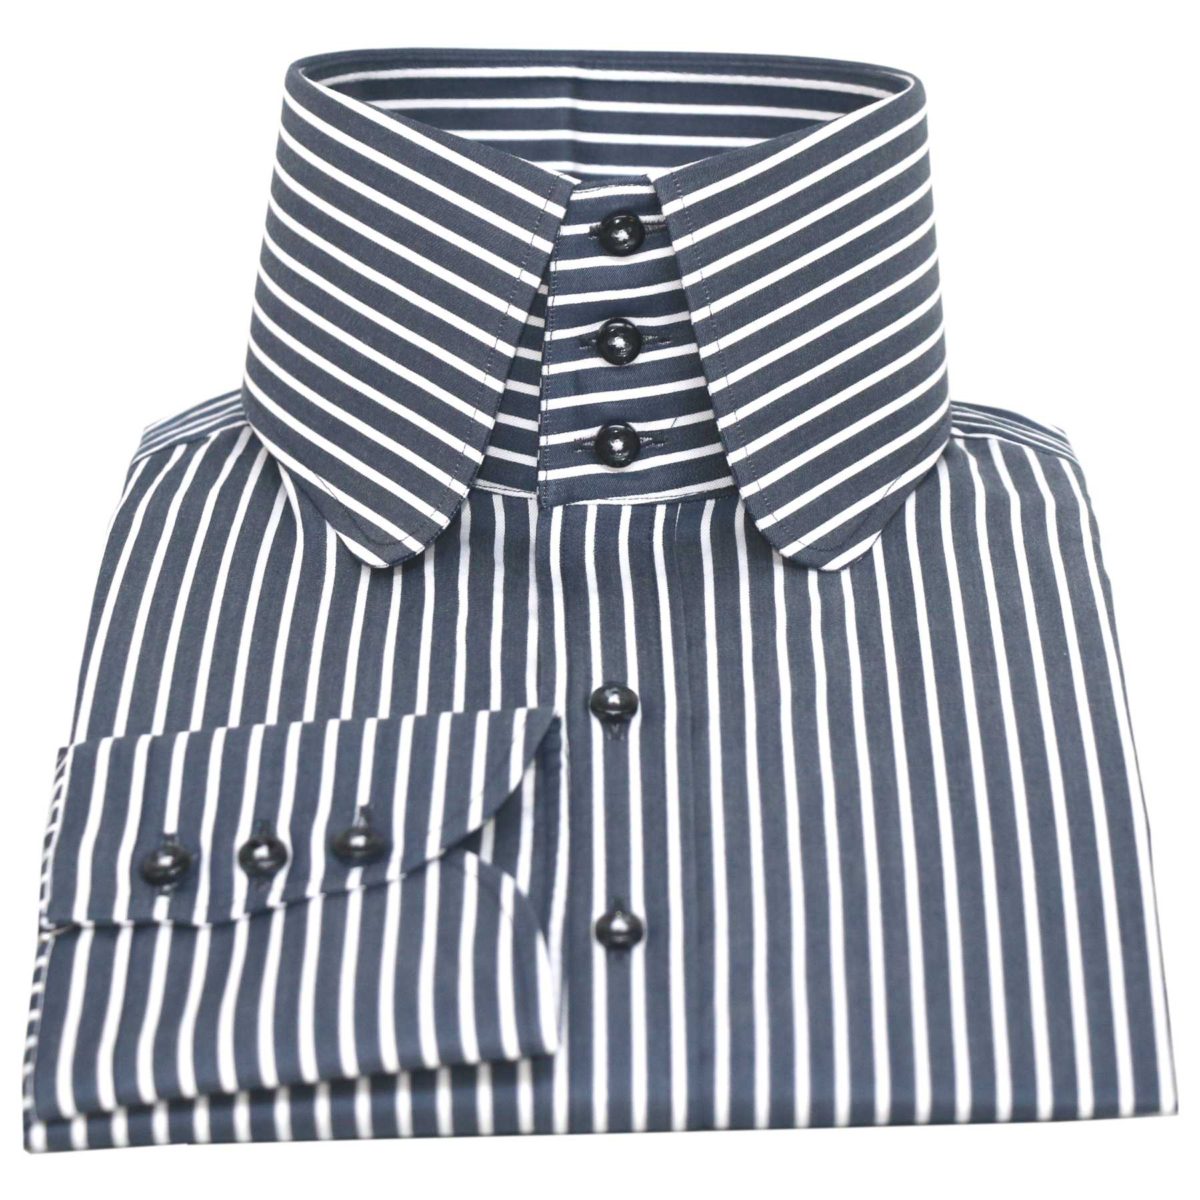 Navy BLue stripes high penny collar 100% cotton shirt for men